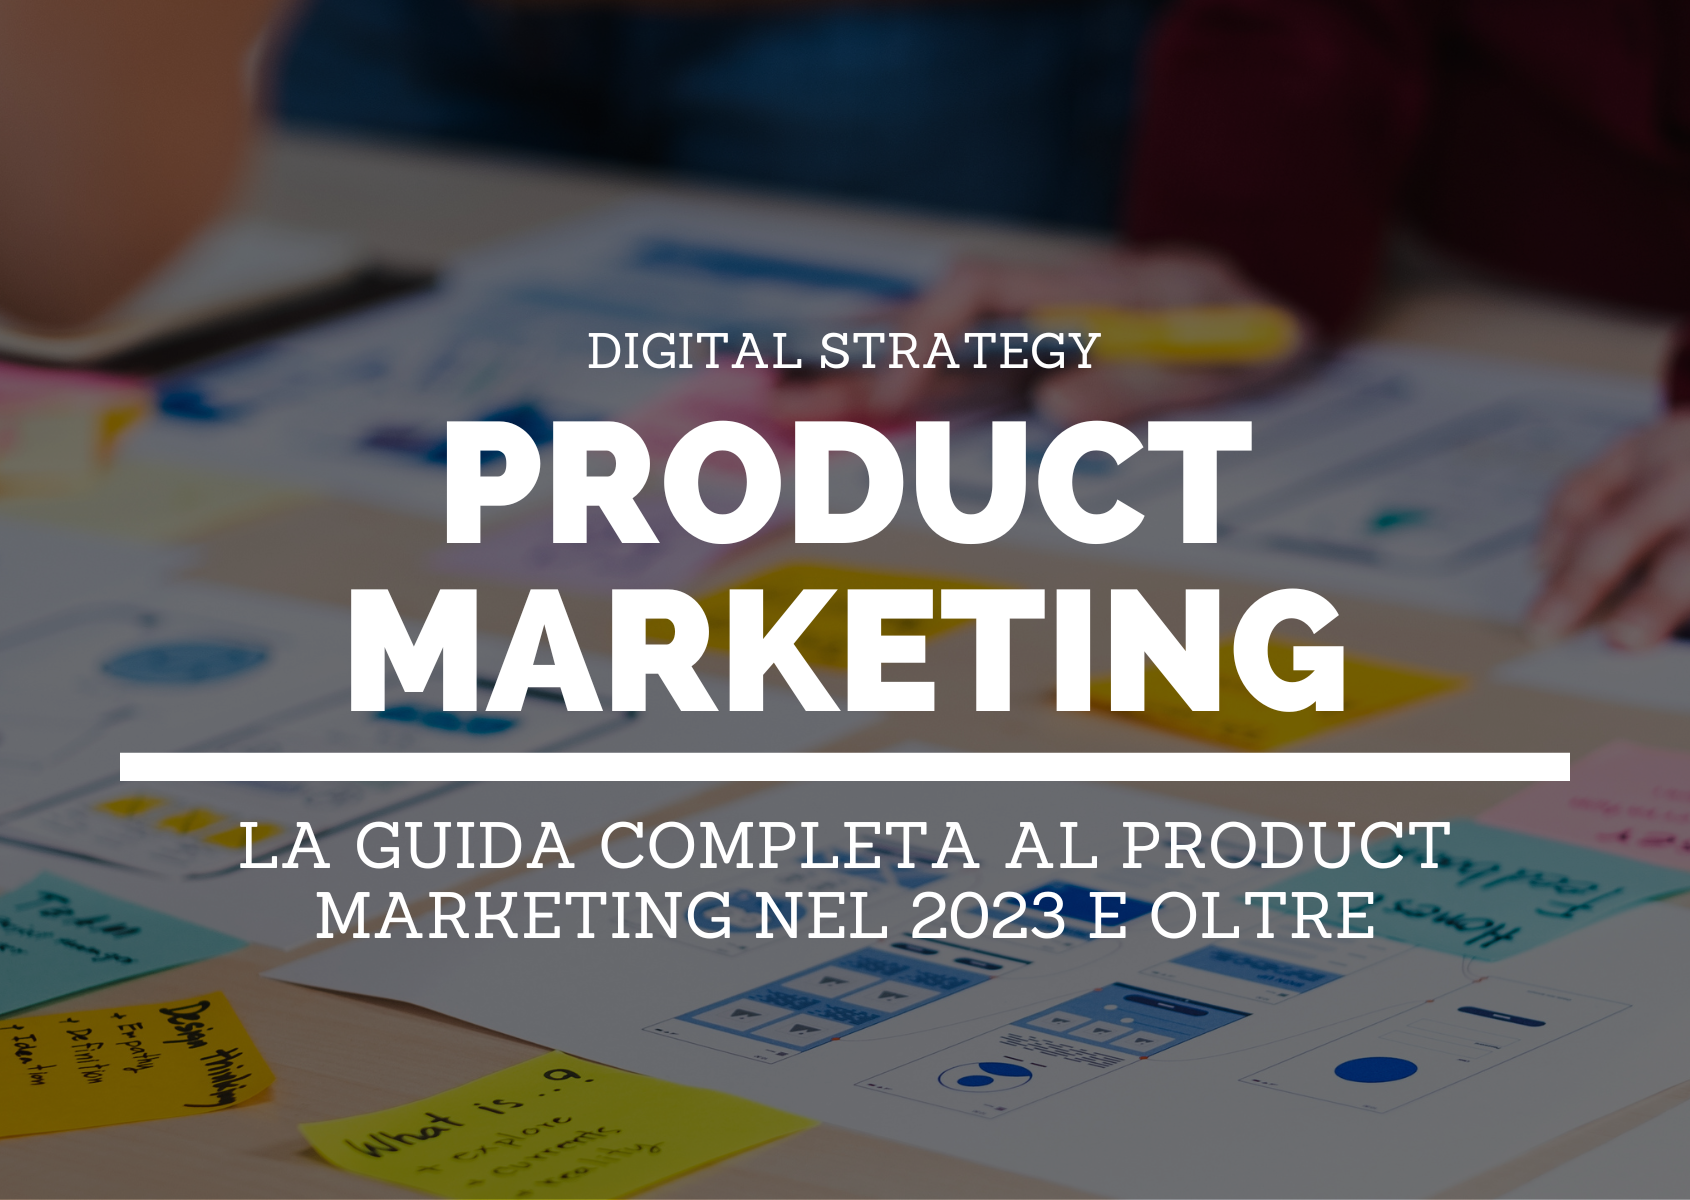 La guida completa al product marketing [AML] - Blog post - 3 (4)-1